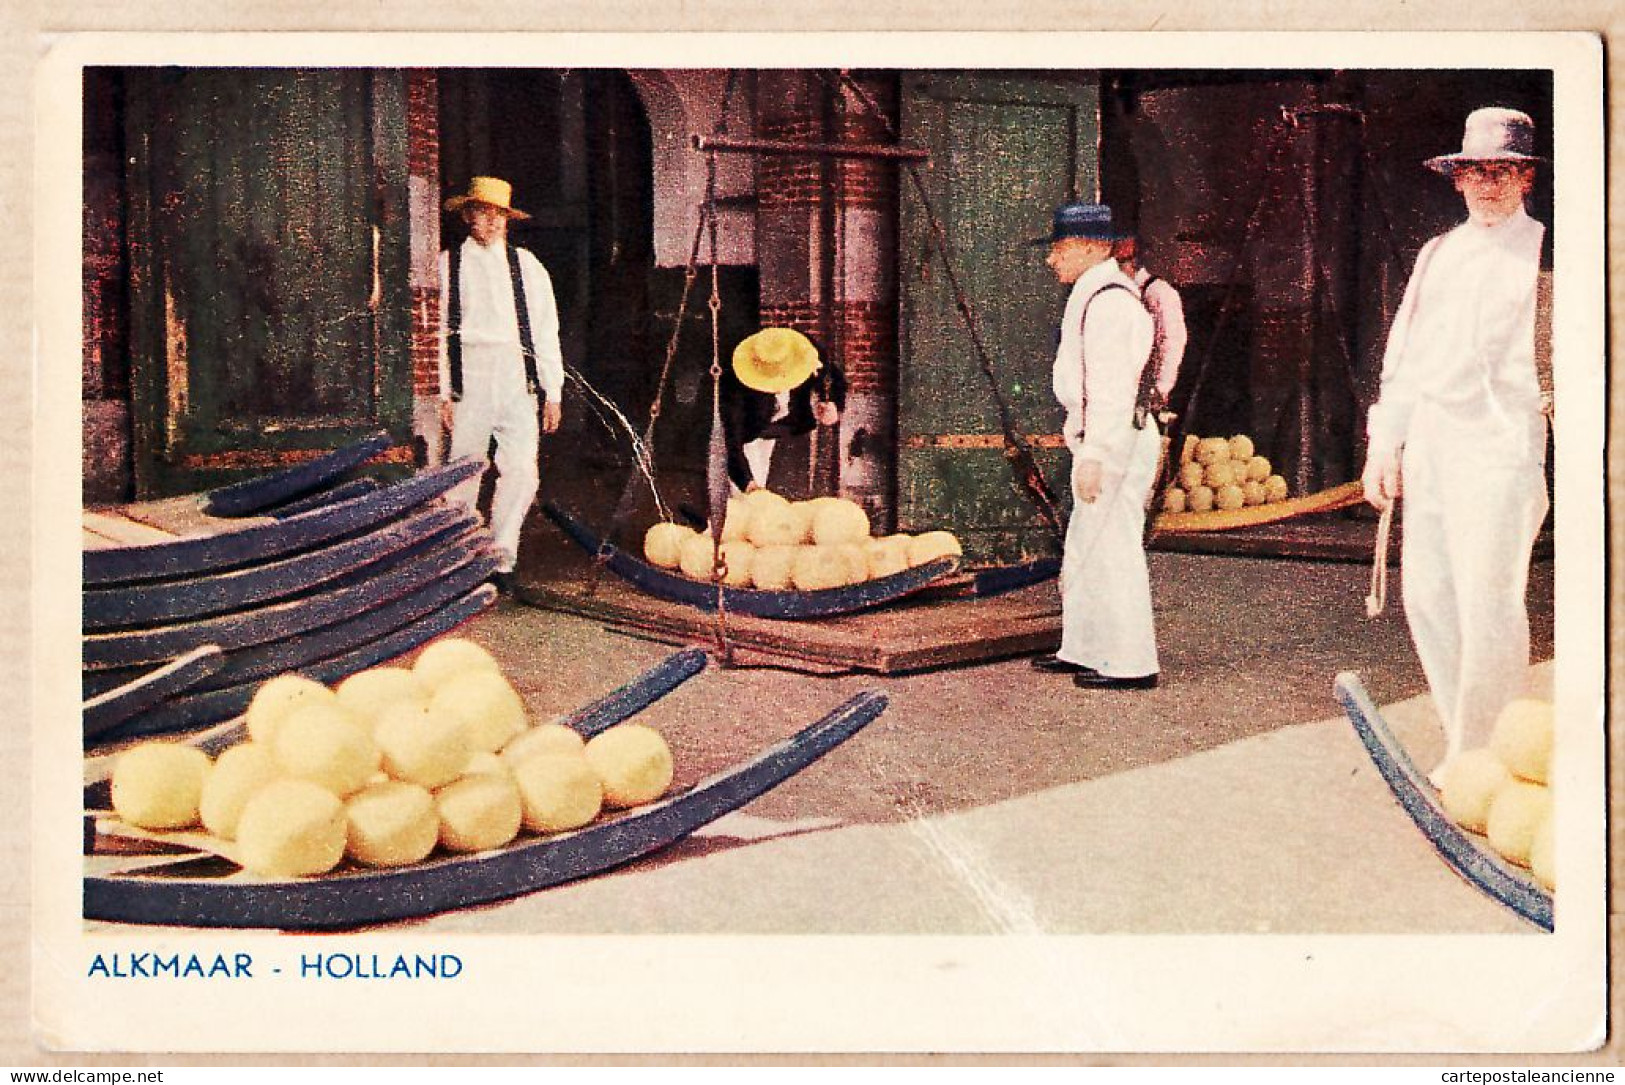 07582 ● Nederland Holland - Kaasmarkt ALKMAAR Cheese Holland Market Marché Fromage Hollande 1940s - Alkmaar